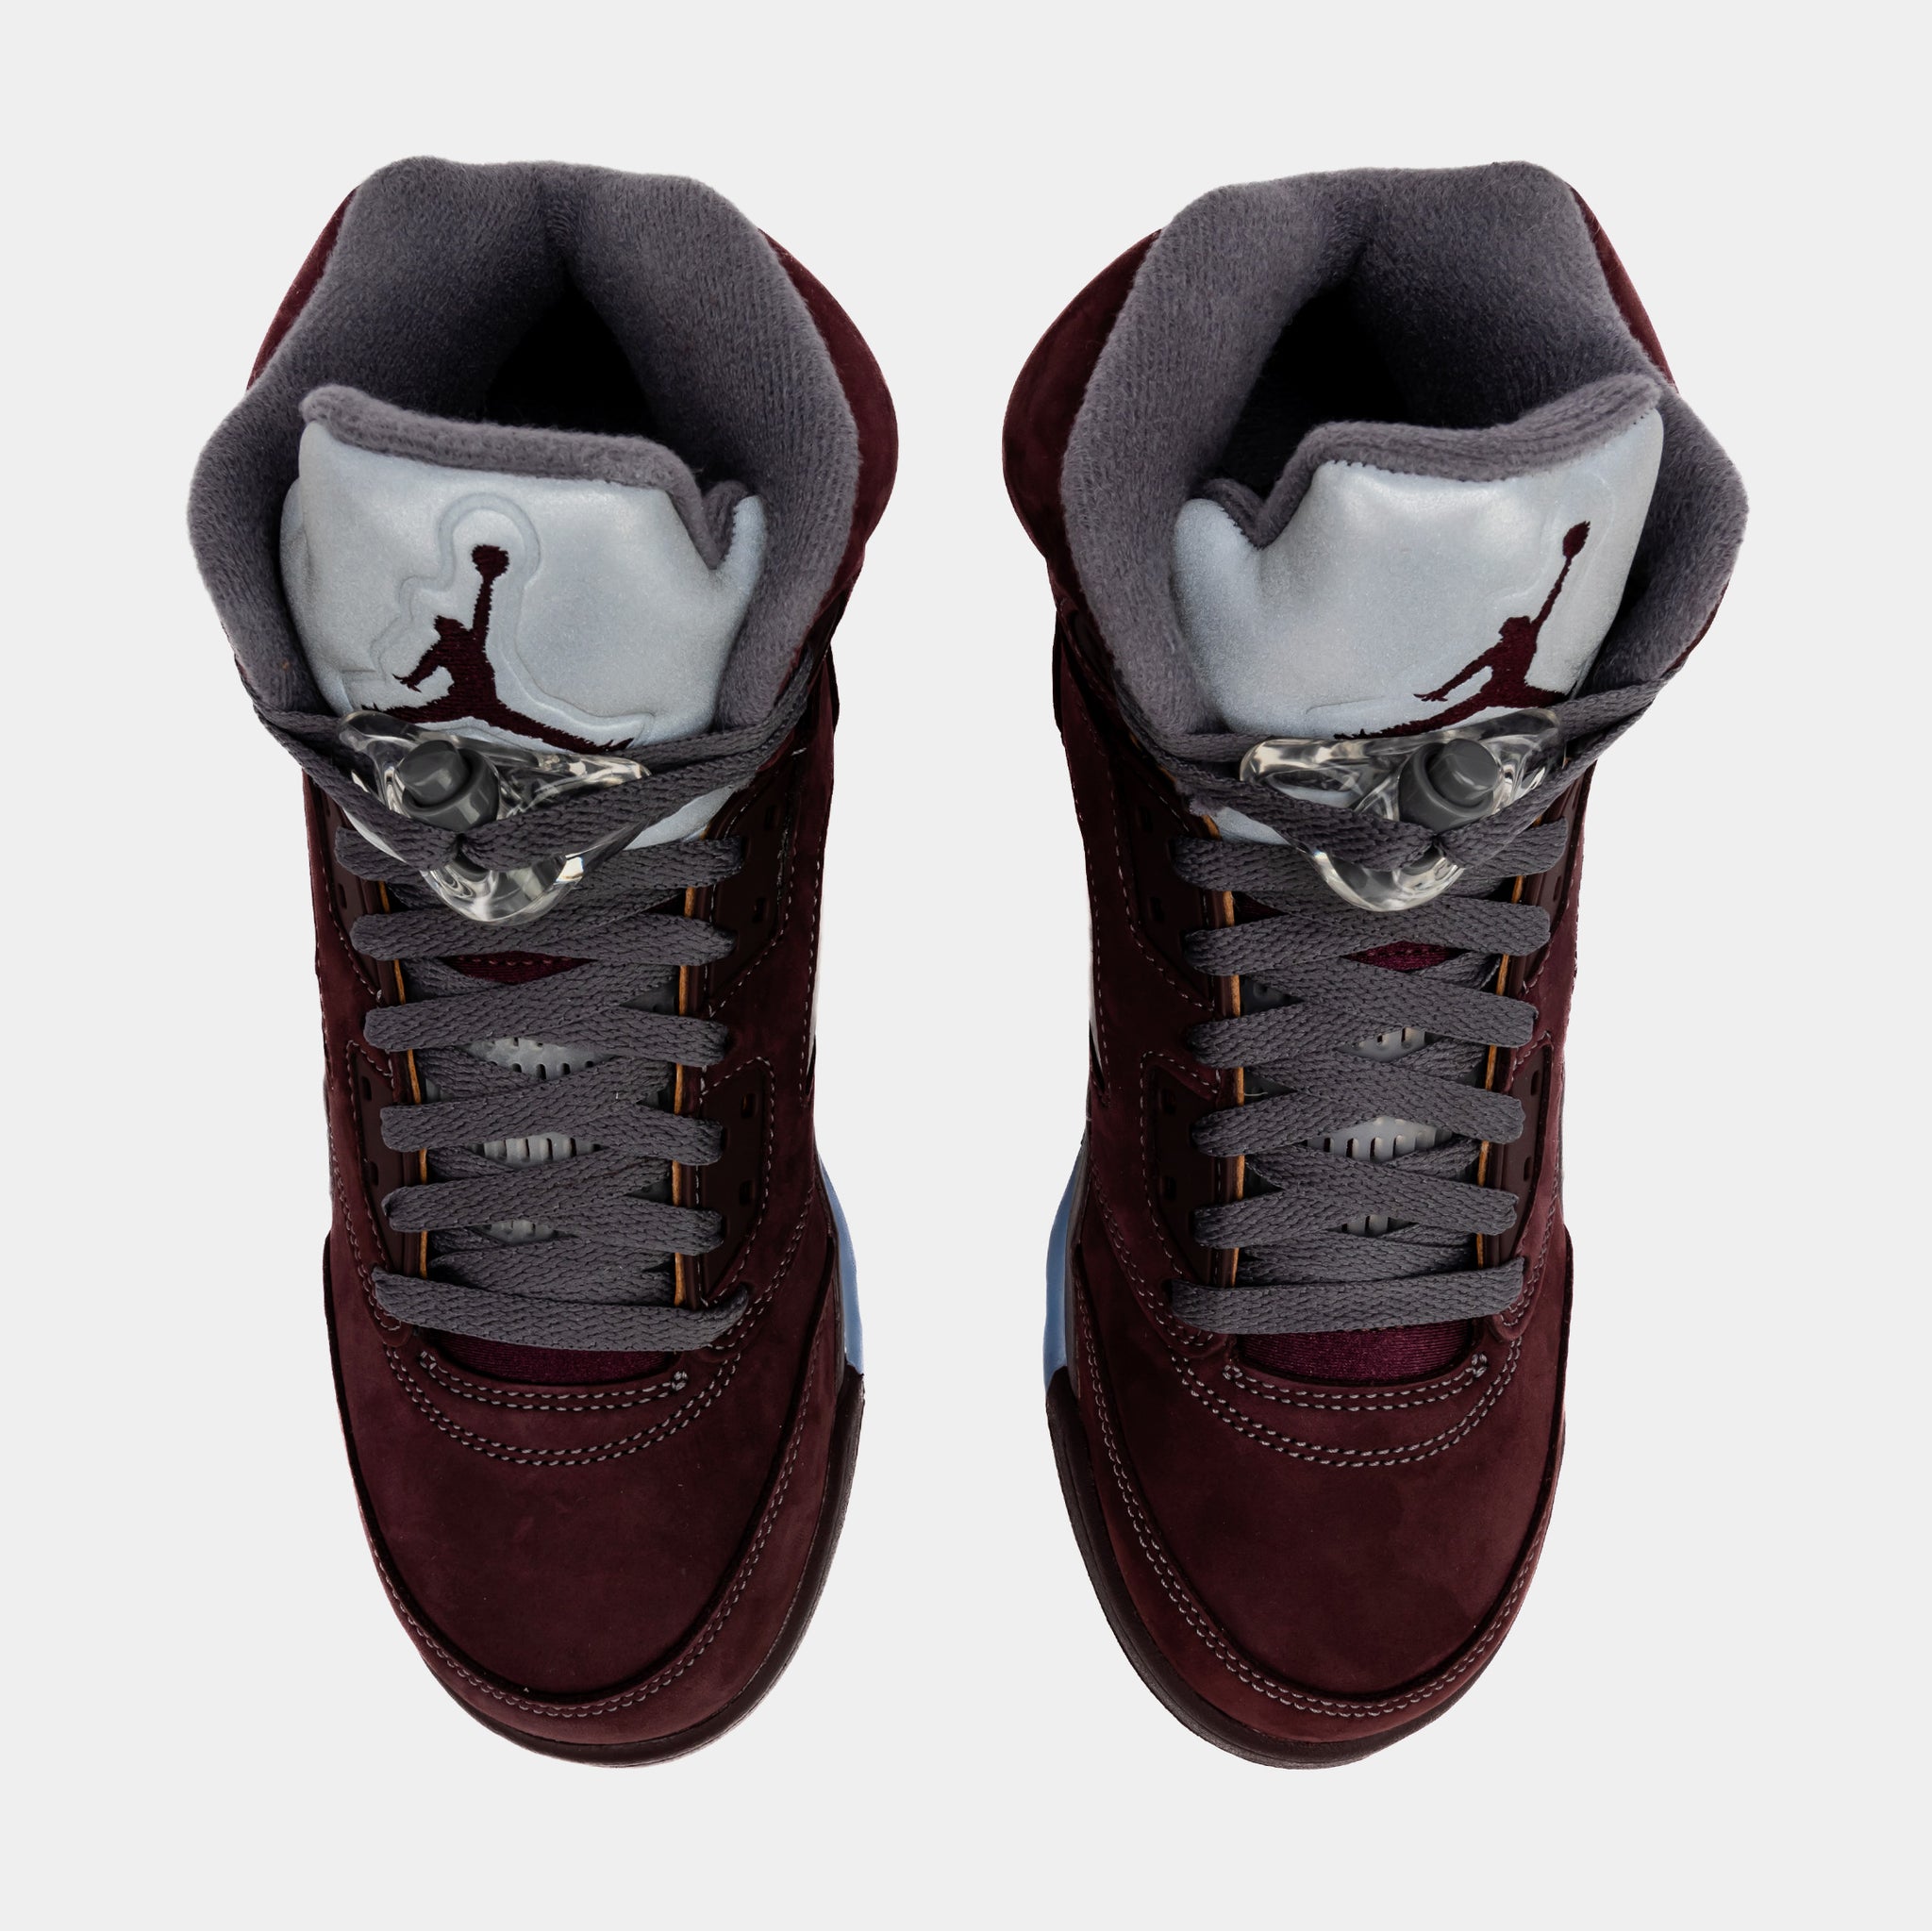 Jordan Air Jordan 5 Retro SE Burgundy Grade School Lifestyle Shoes